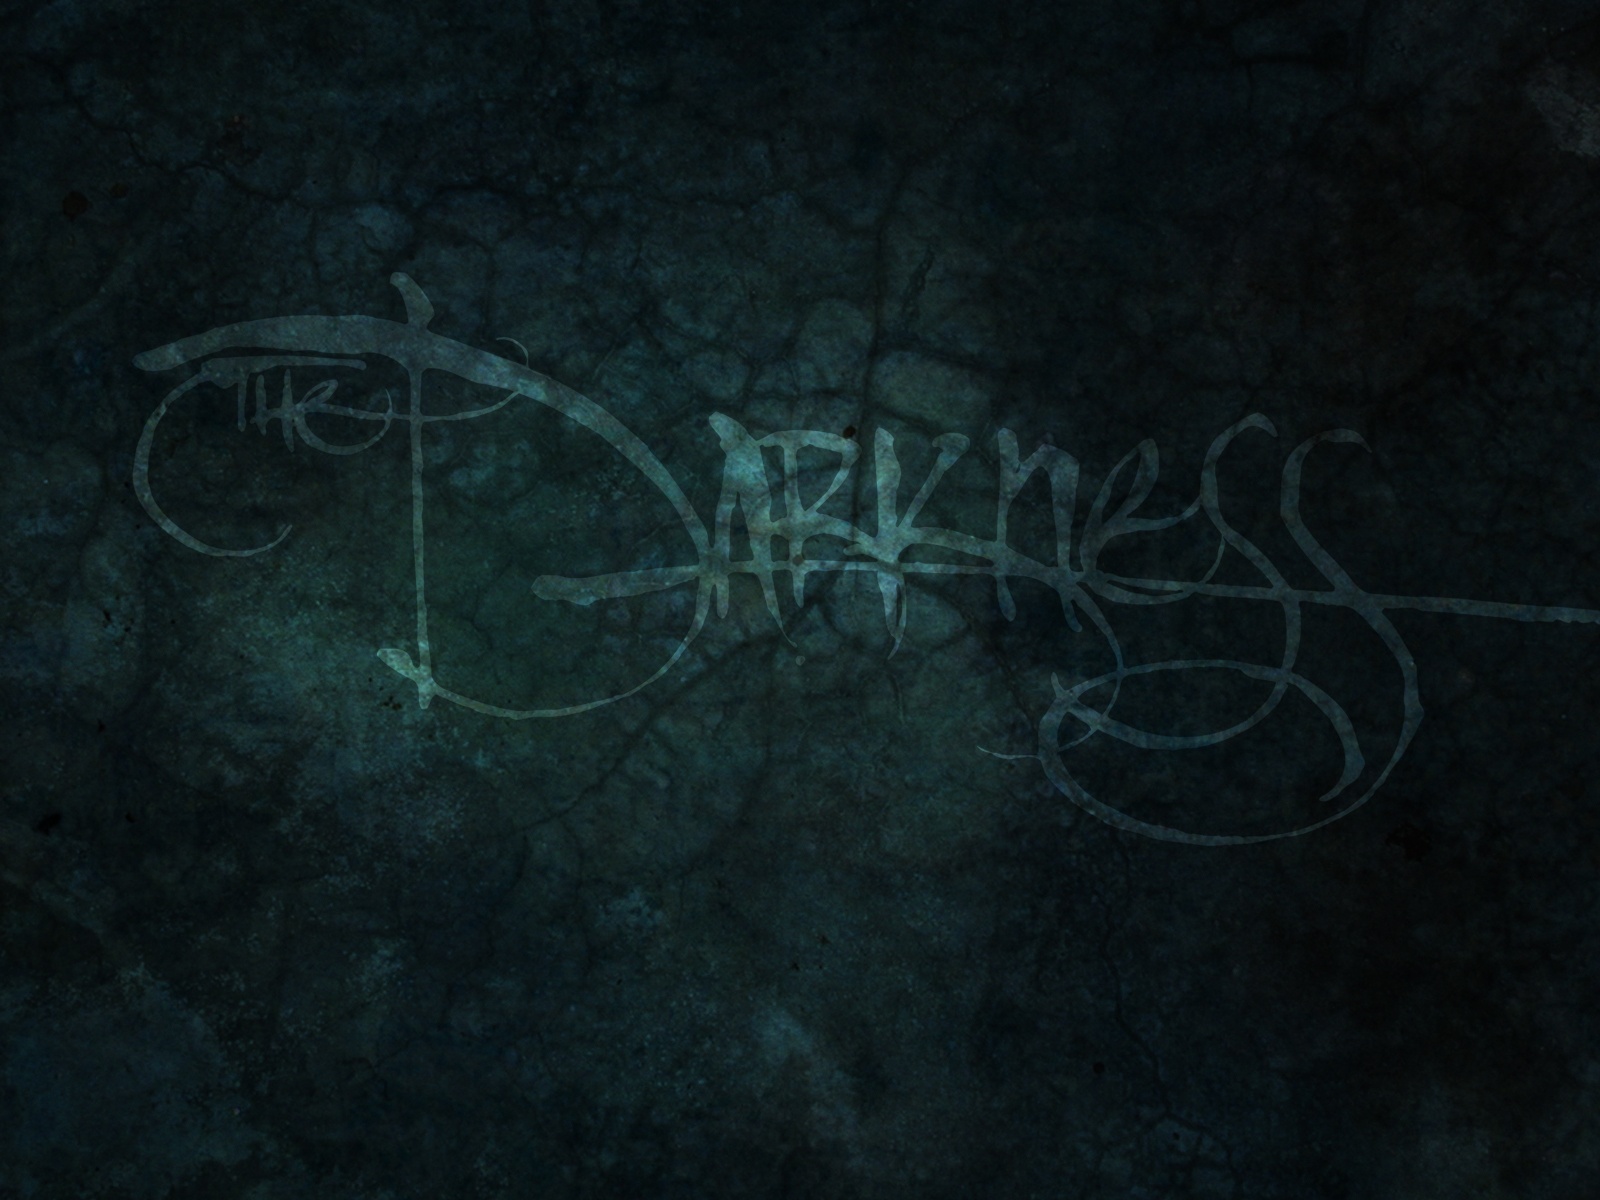 Darkness_02_1600x1200.jpg